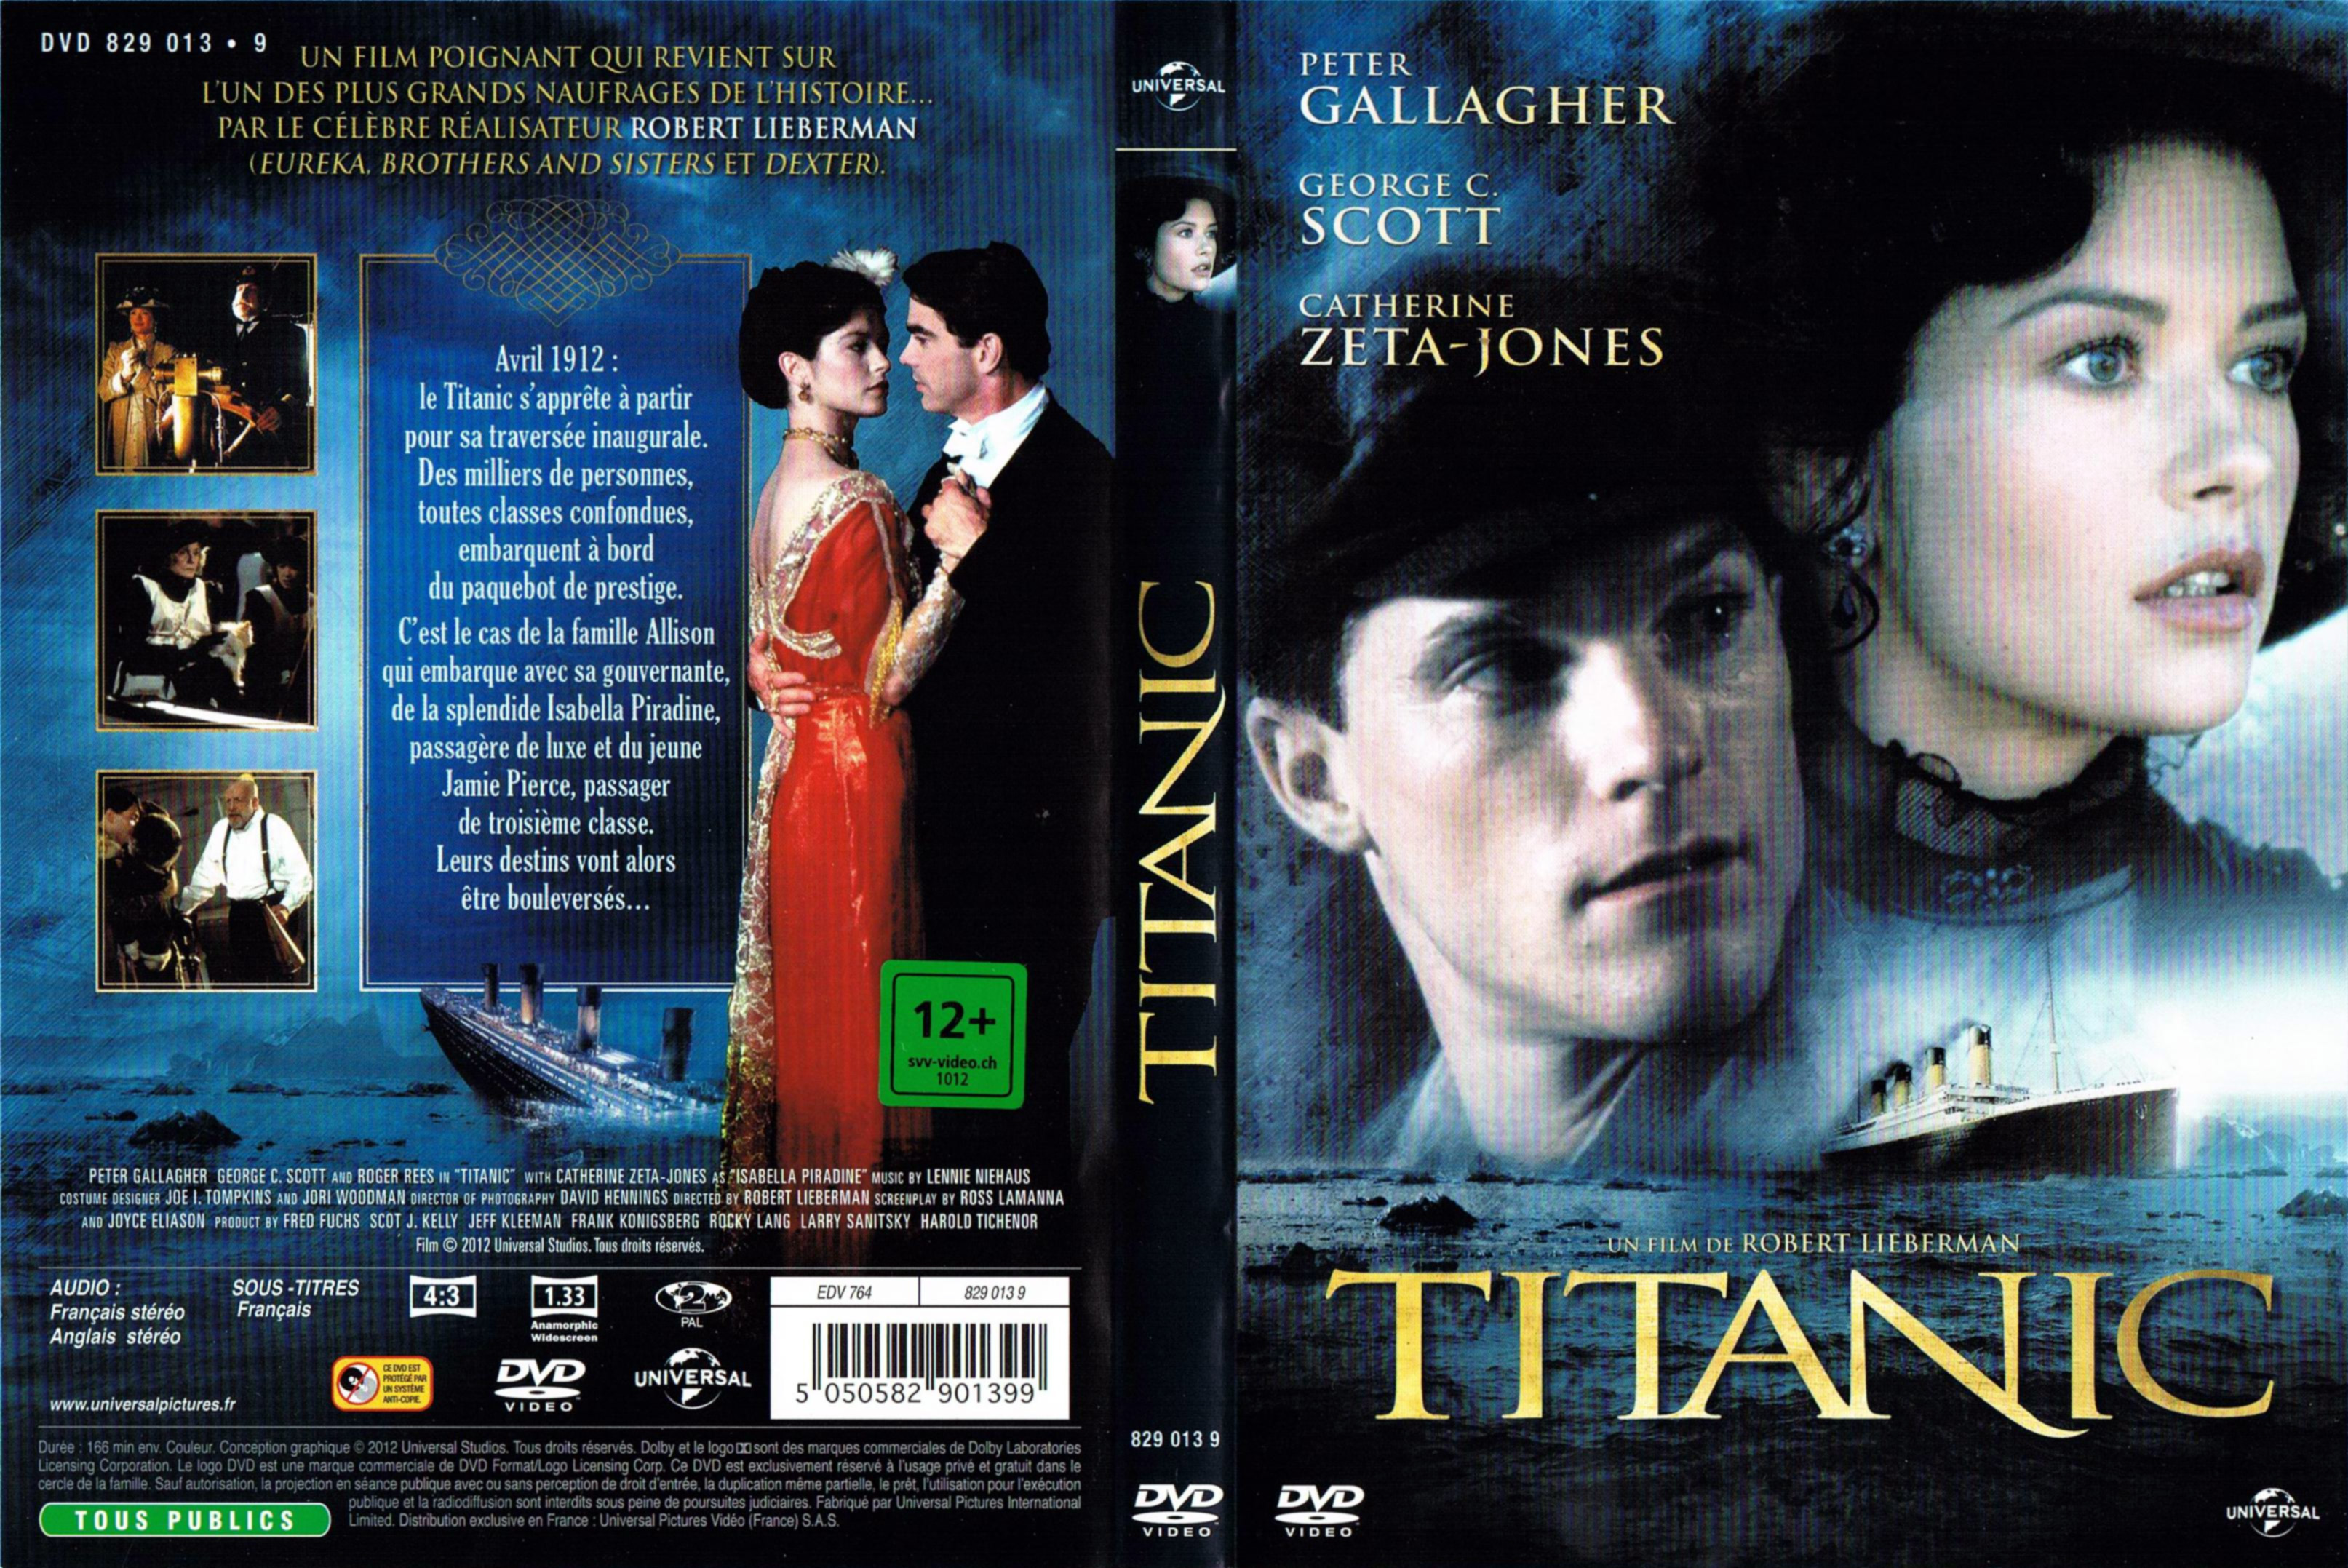 Jaquette DVD Titanic (1996) v2